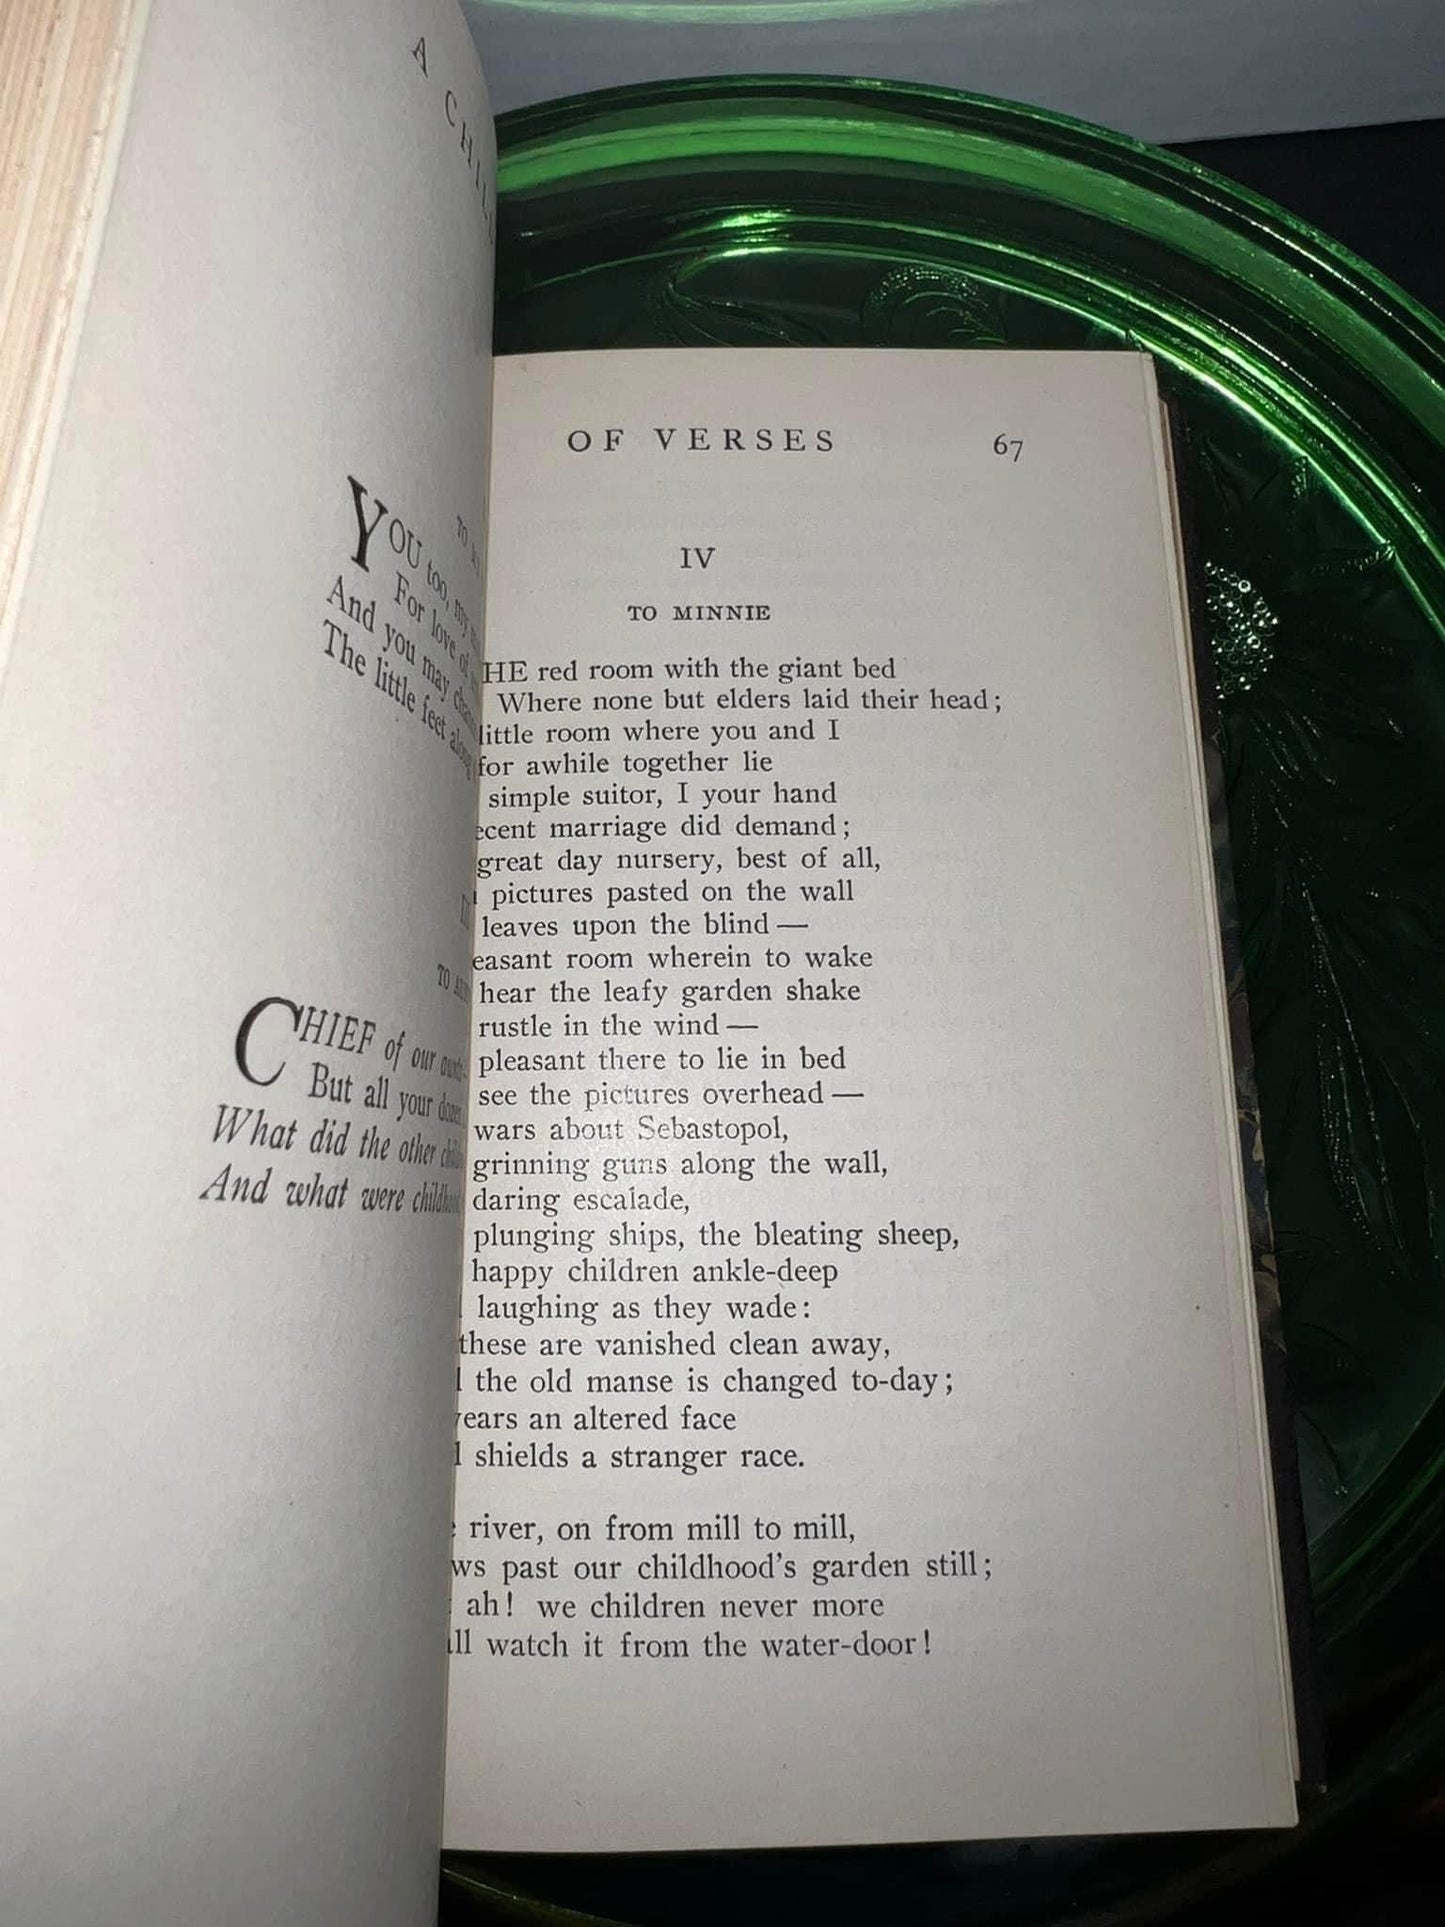 Antique 1905 The biographical edition Robert Louis Stevenson Complete poems - a child’s garden of verses , underwood’s- ballads